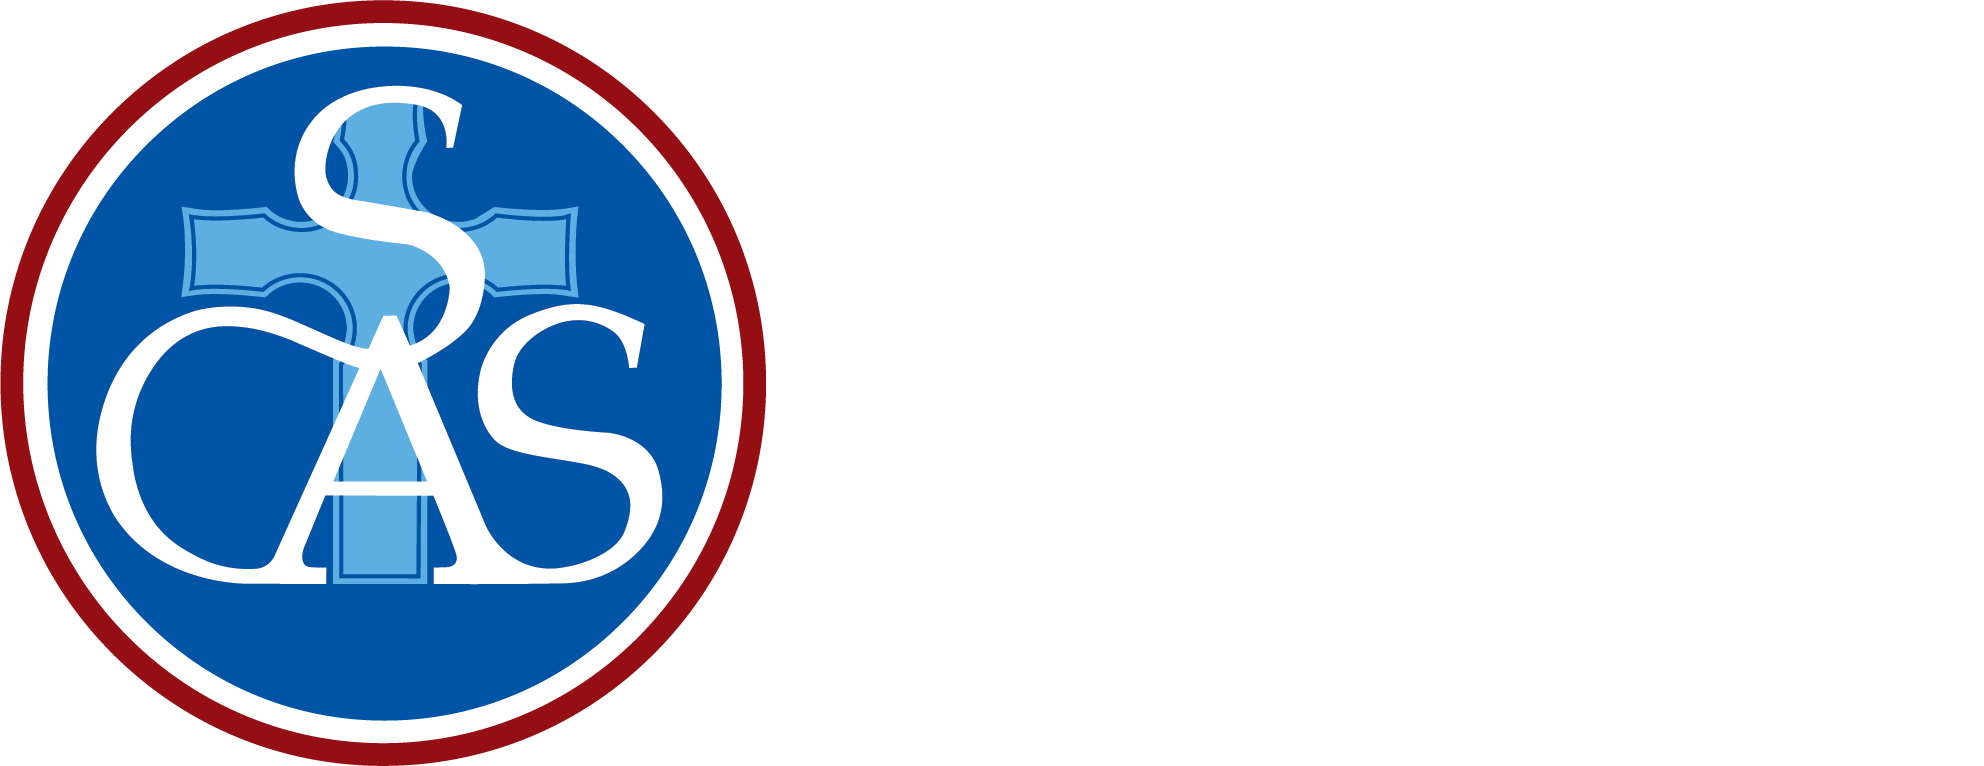 St Columba Anglican School